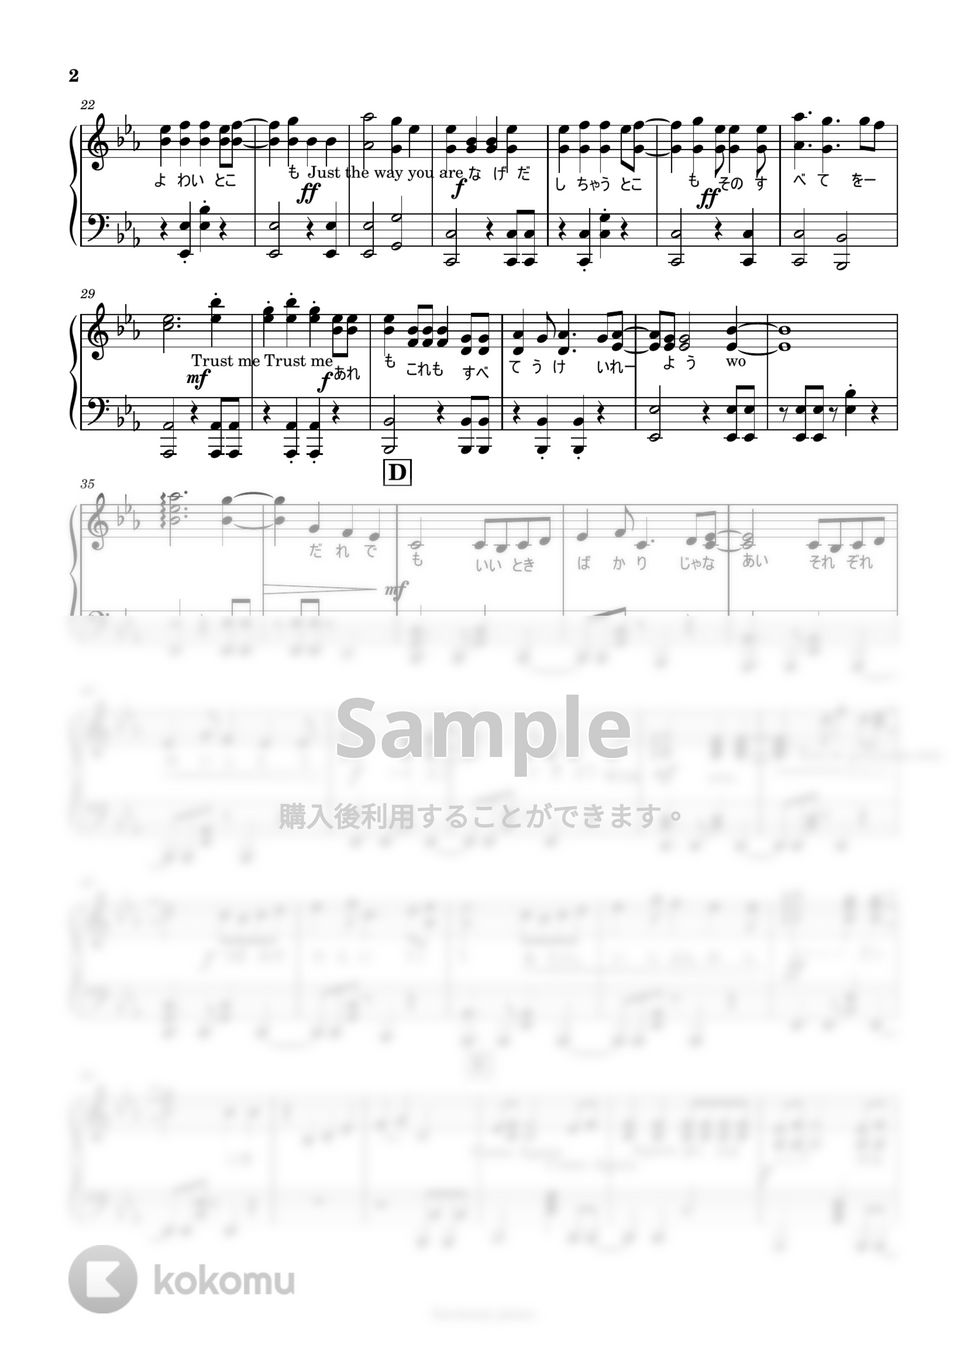 8LOOM - 歌詞付 Come Again (君の花になる) by harmony piano